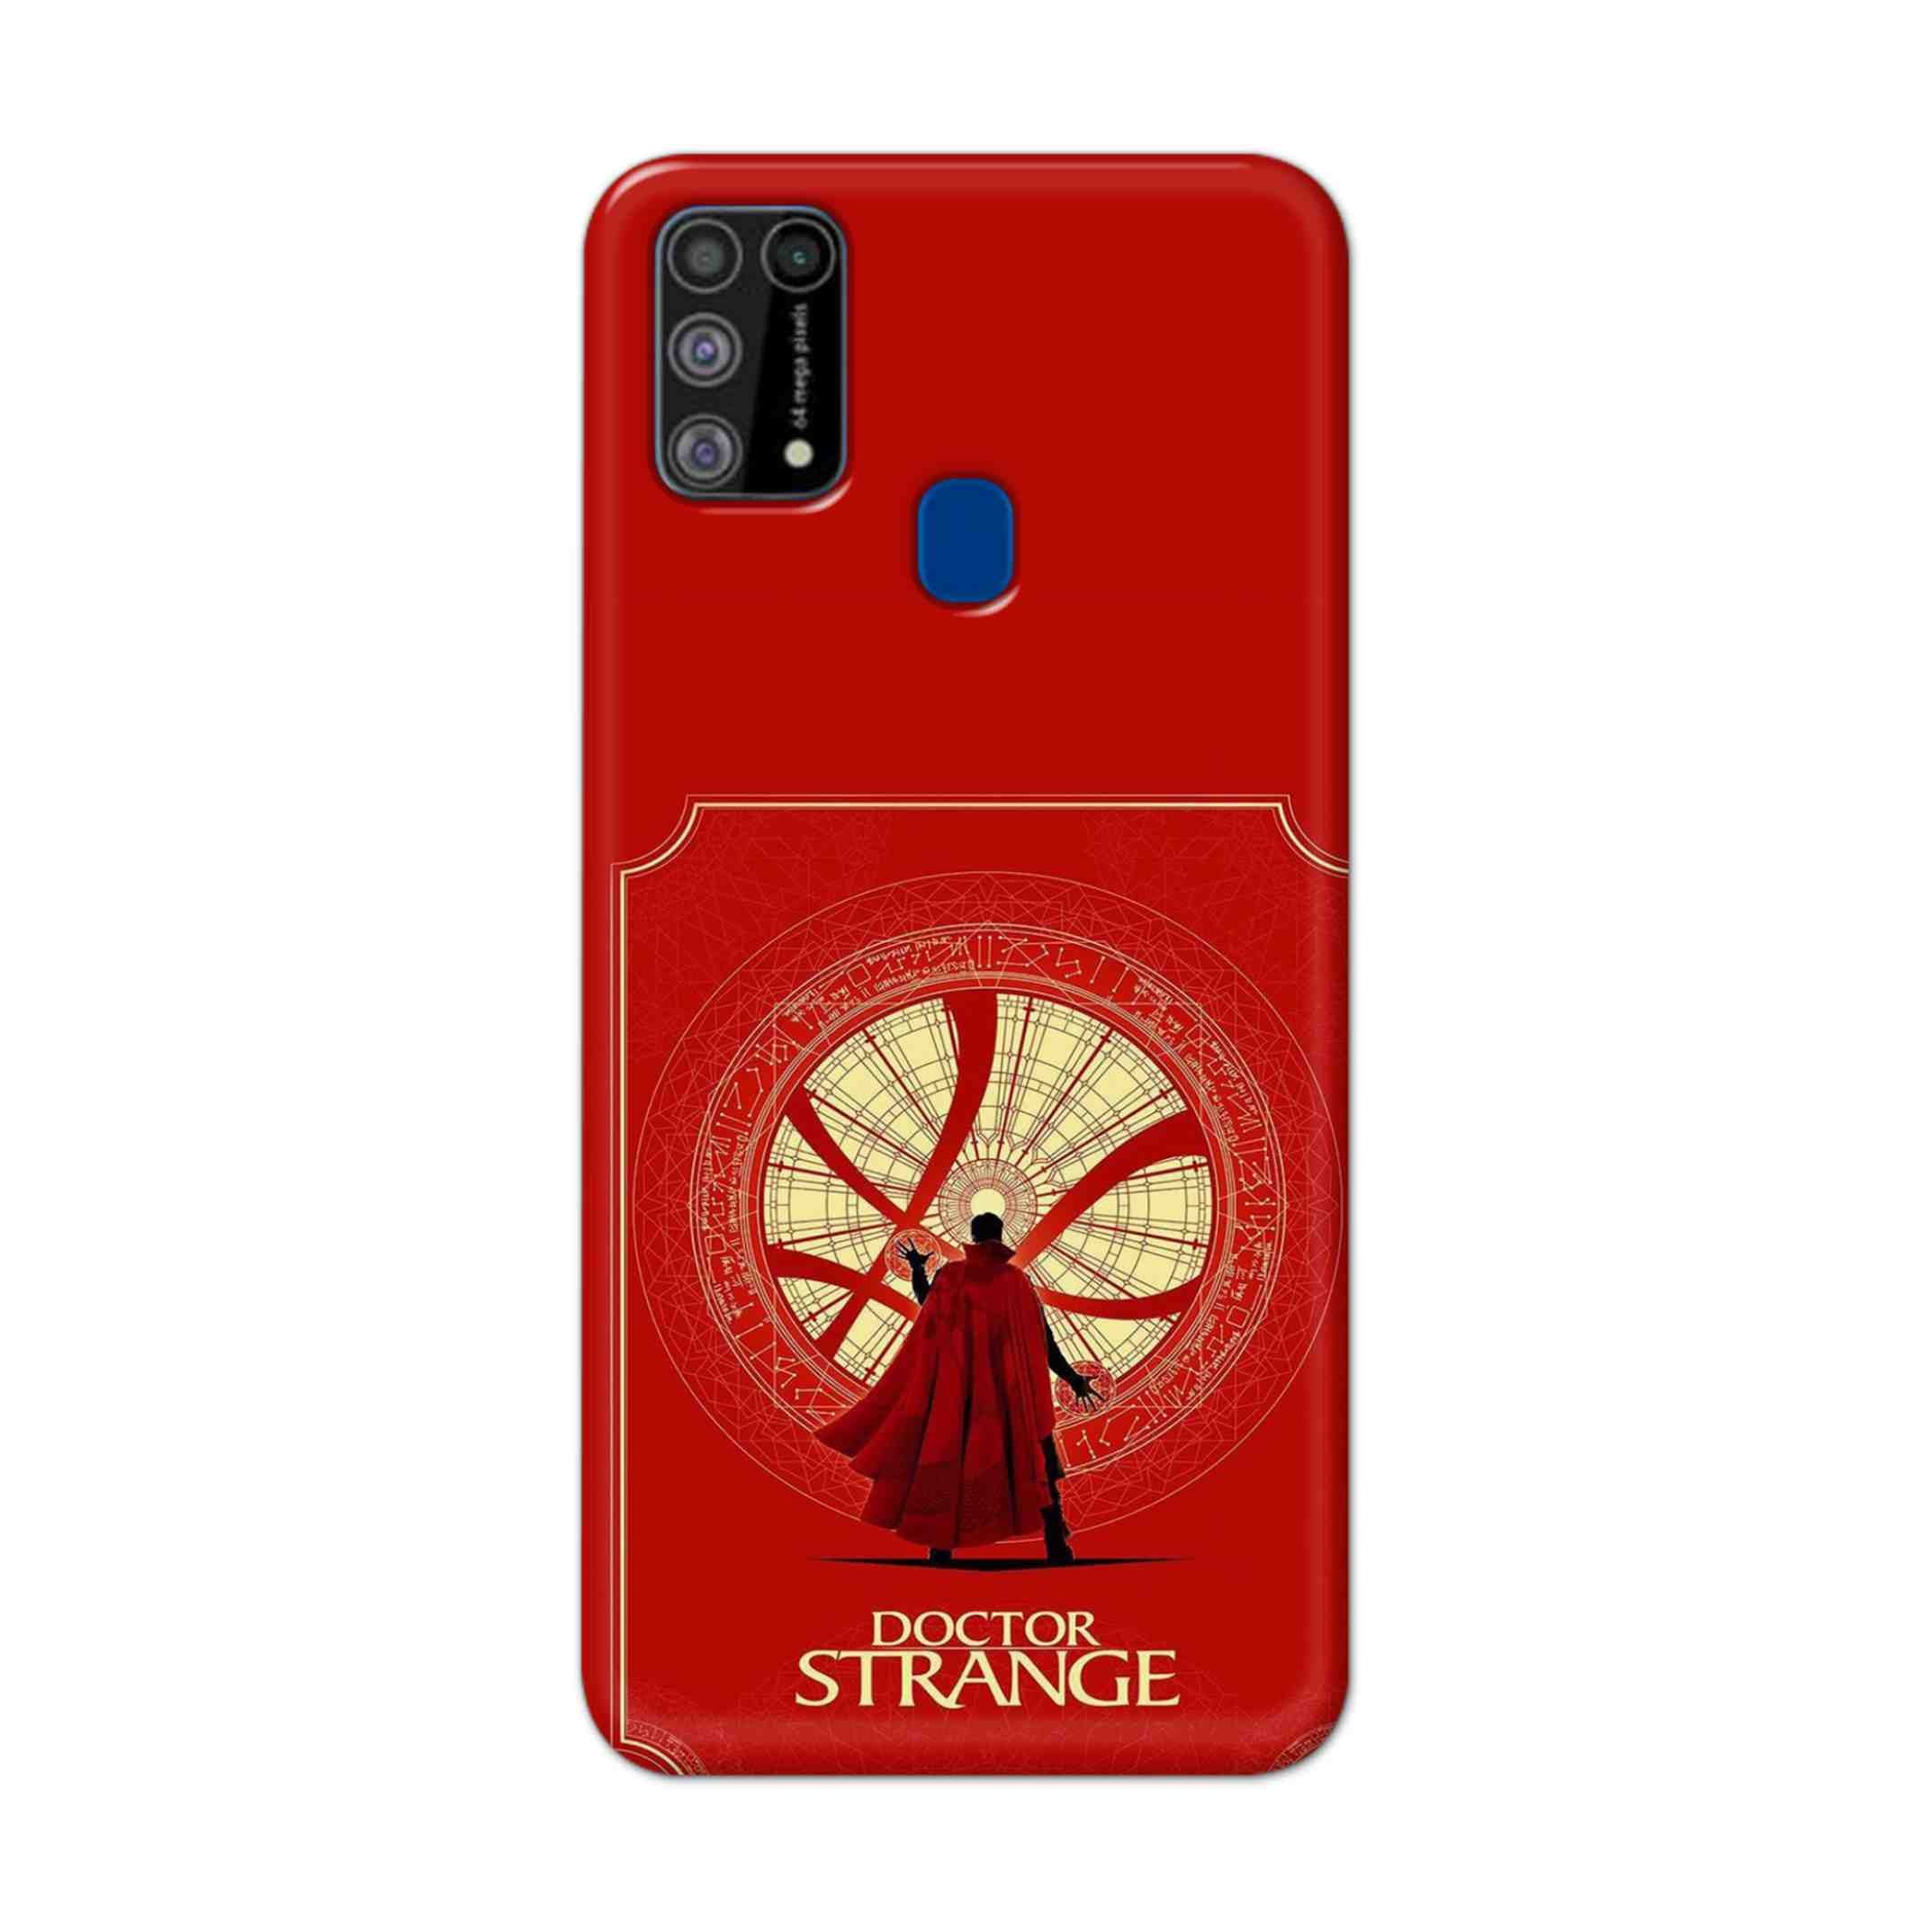 Buy Blood Doctor Strange Hard Back Mobile Phone Case Cover For Samsung Galaxy M31 Online